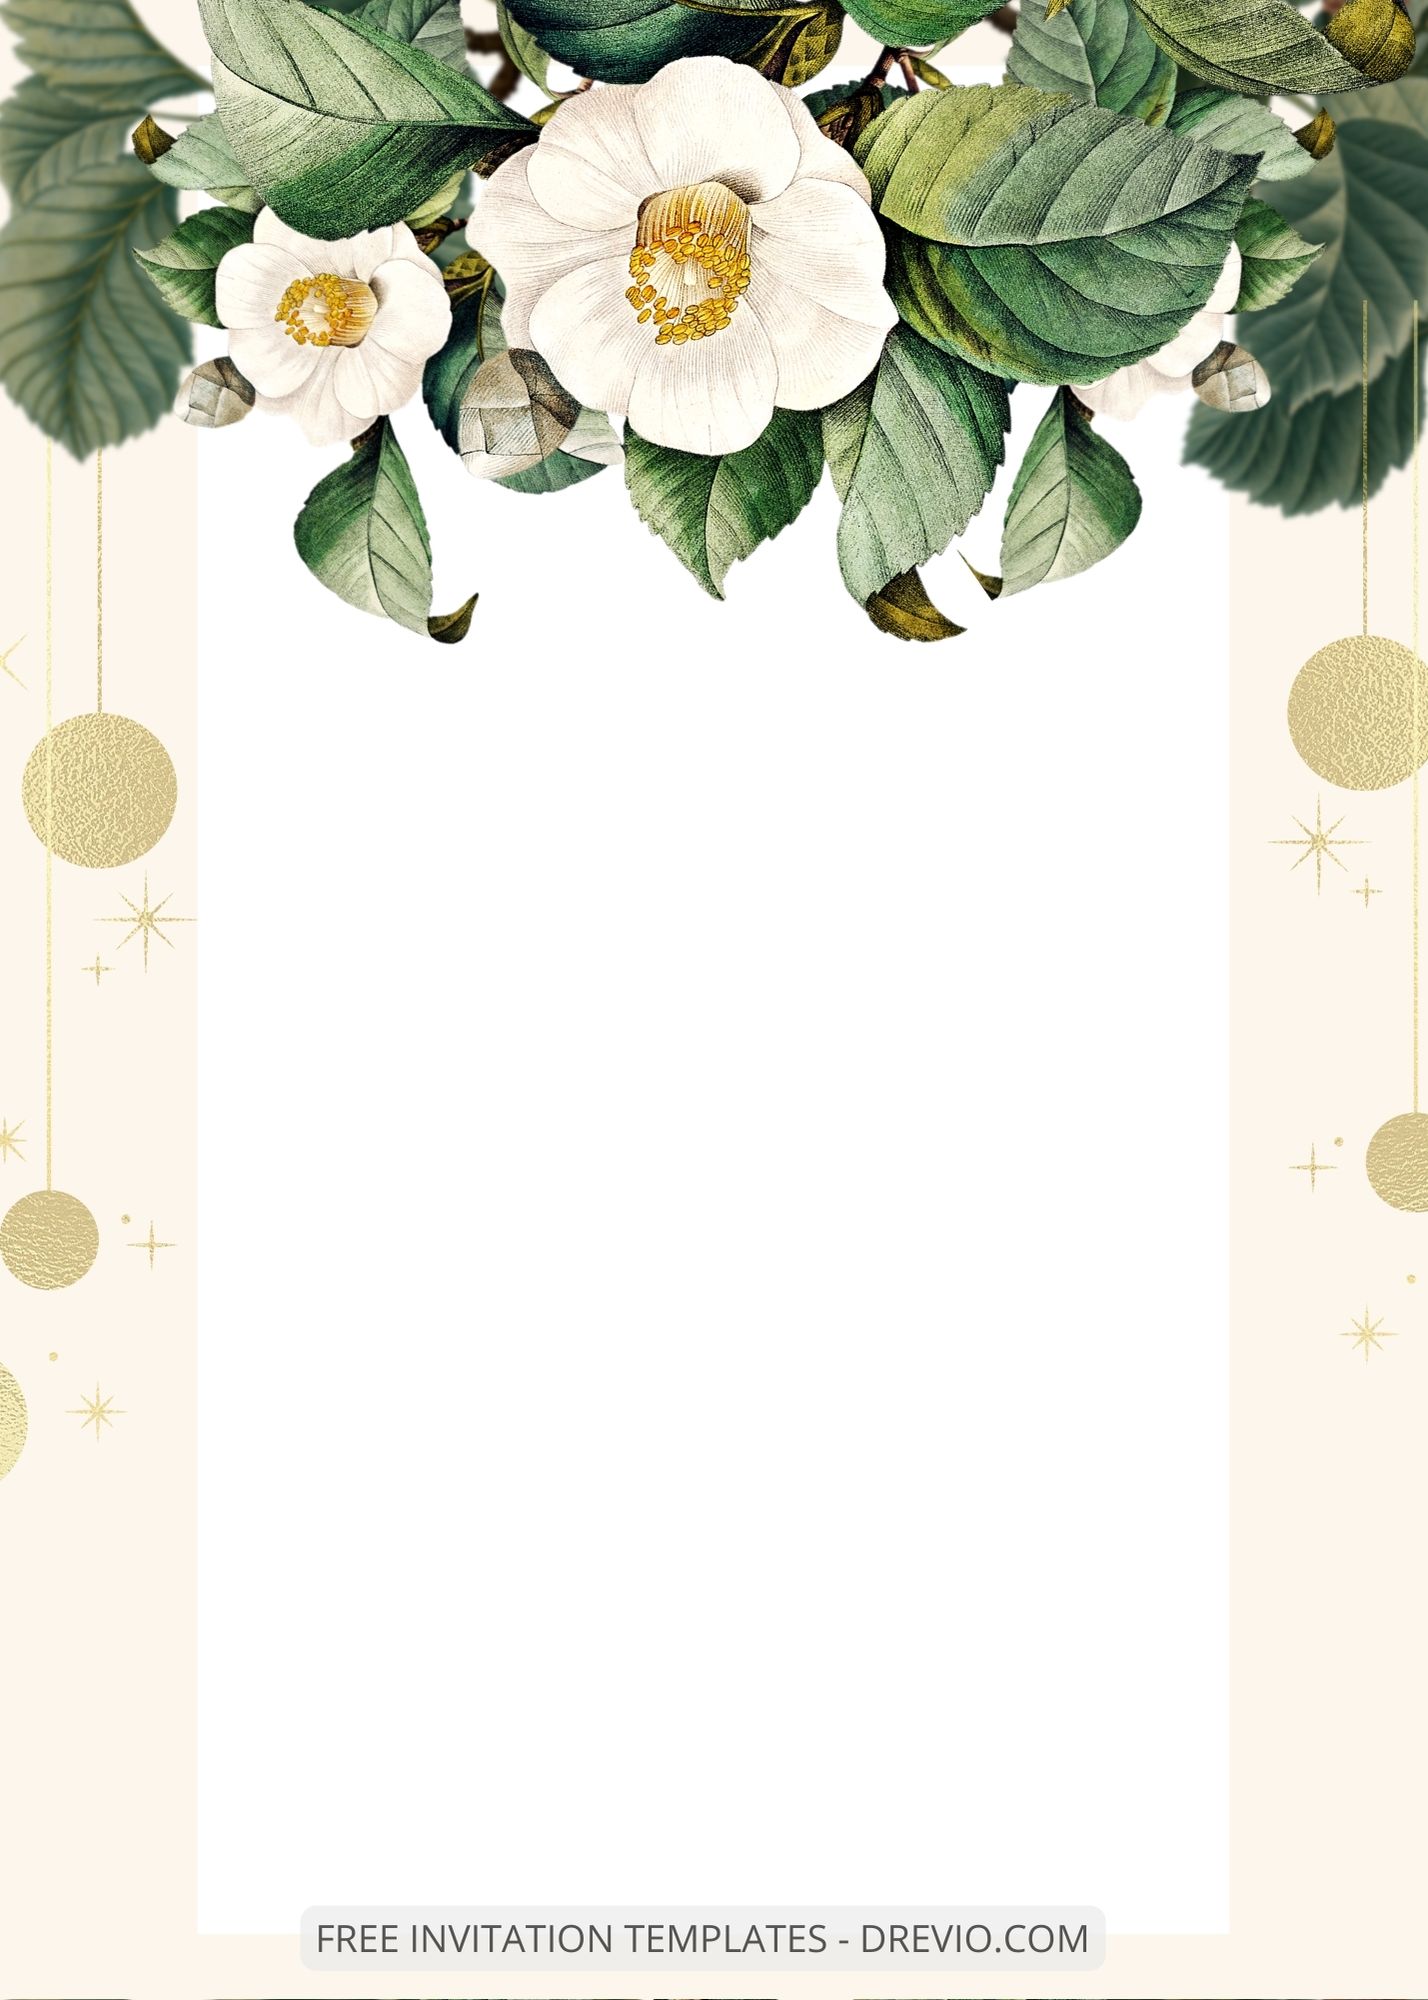 ( Free ) 7+ Simple Camellias Canva Wedding Invitation Templates Two